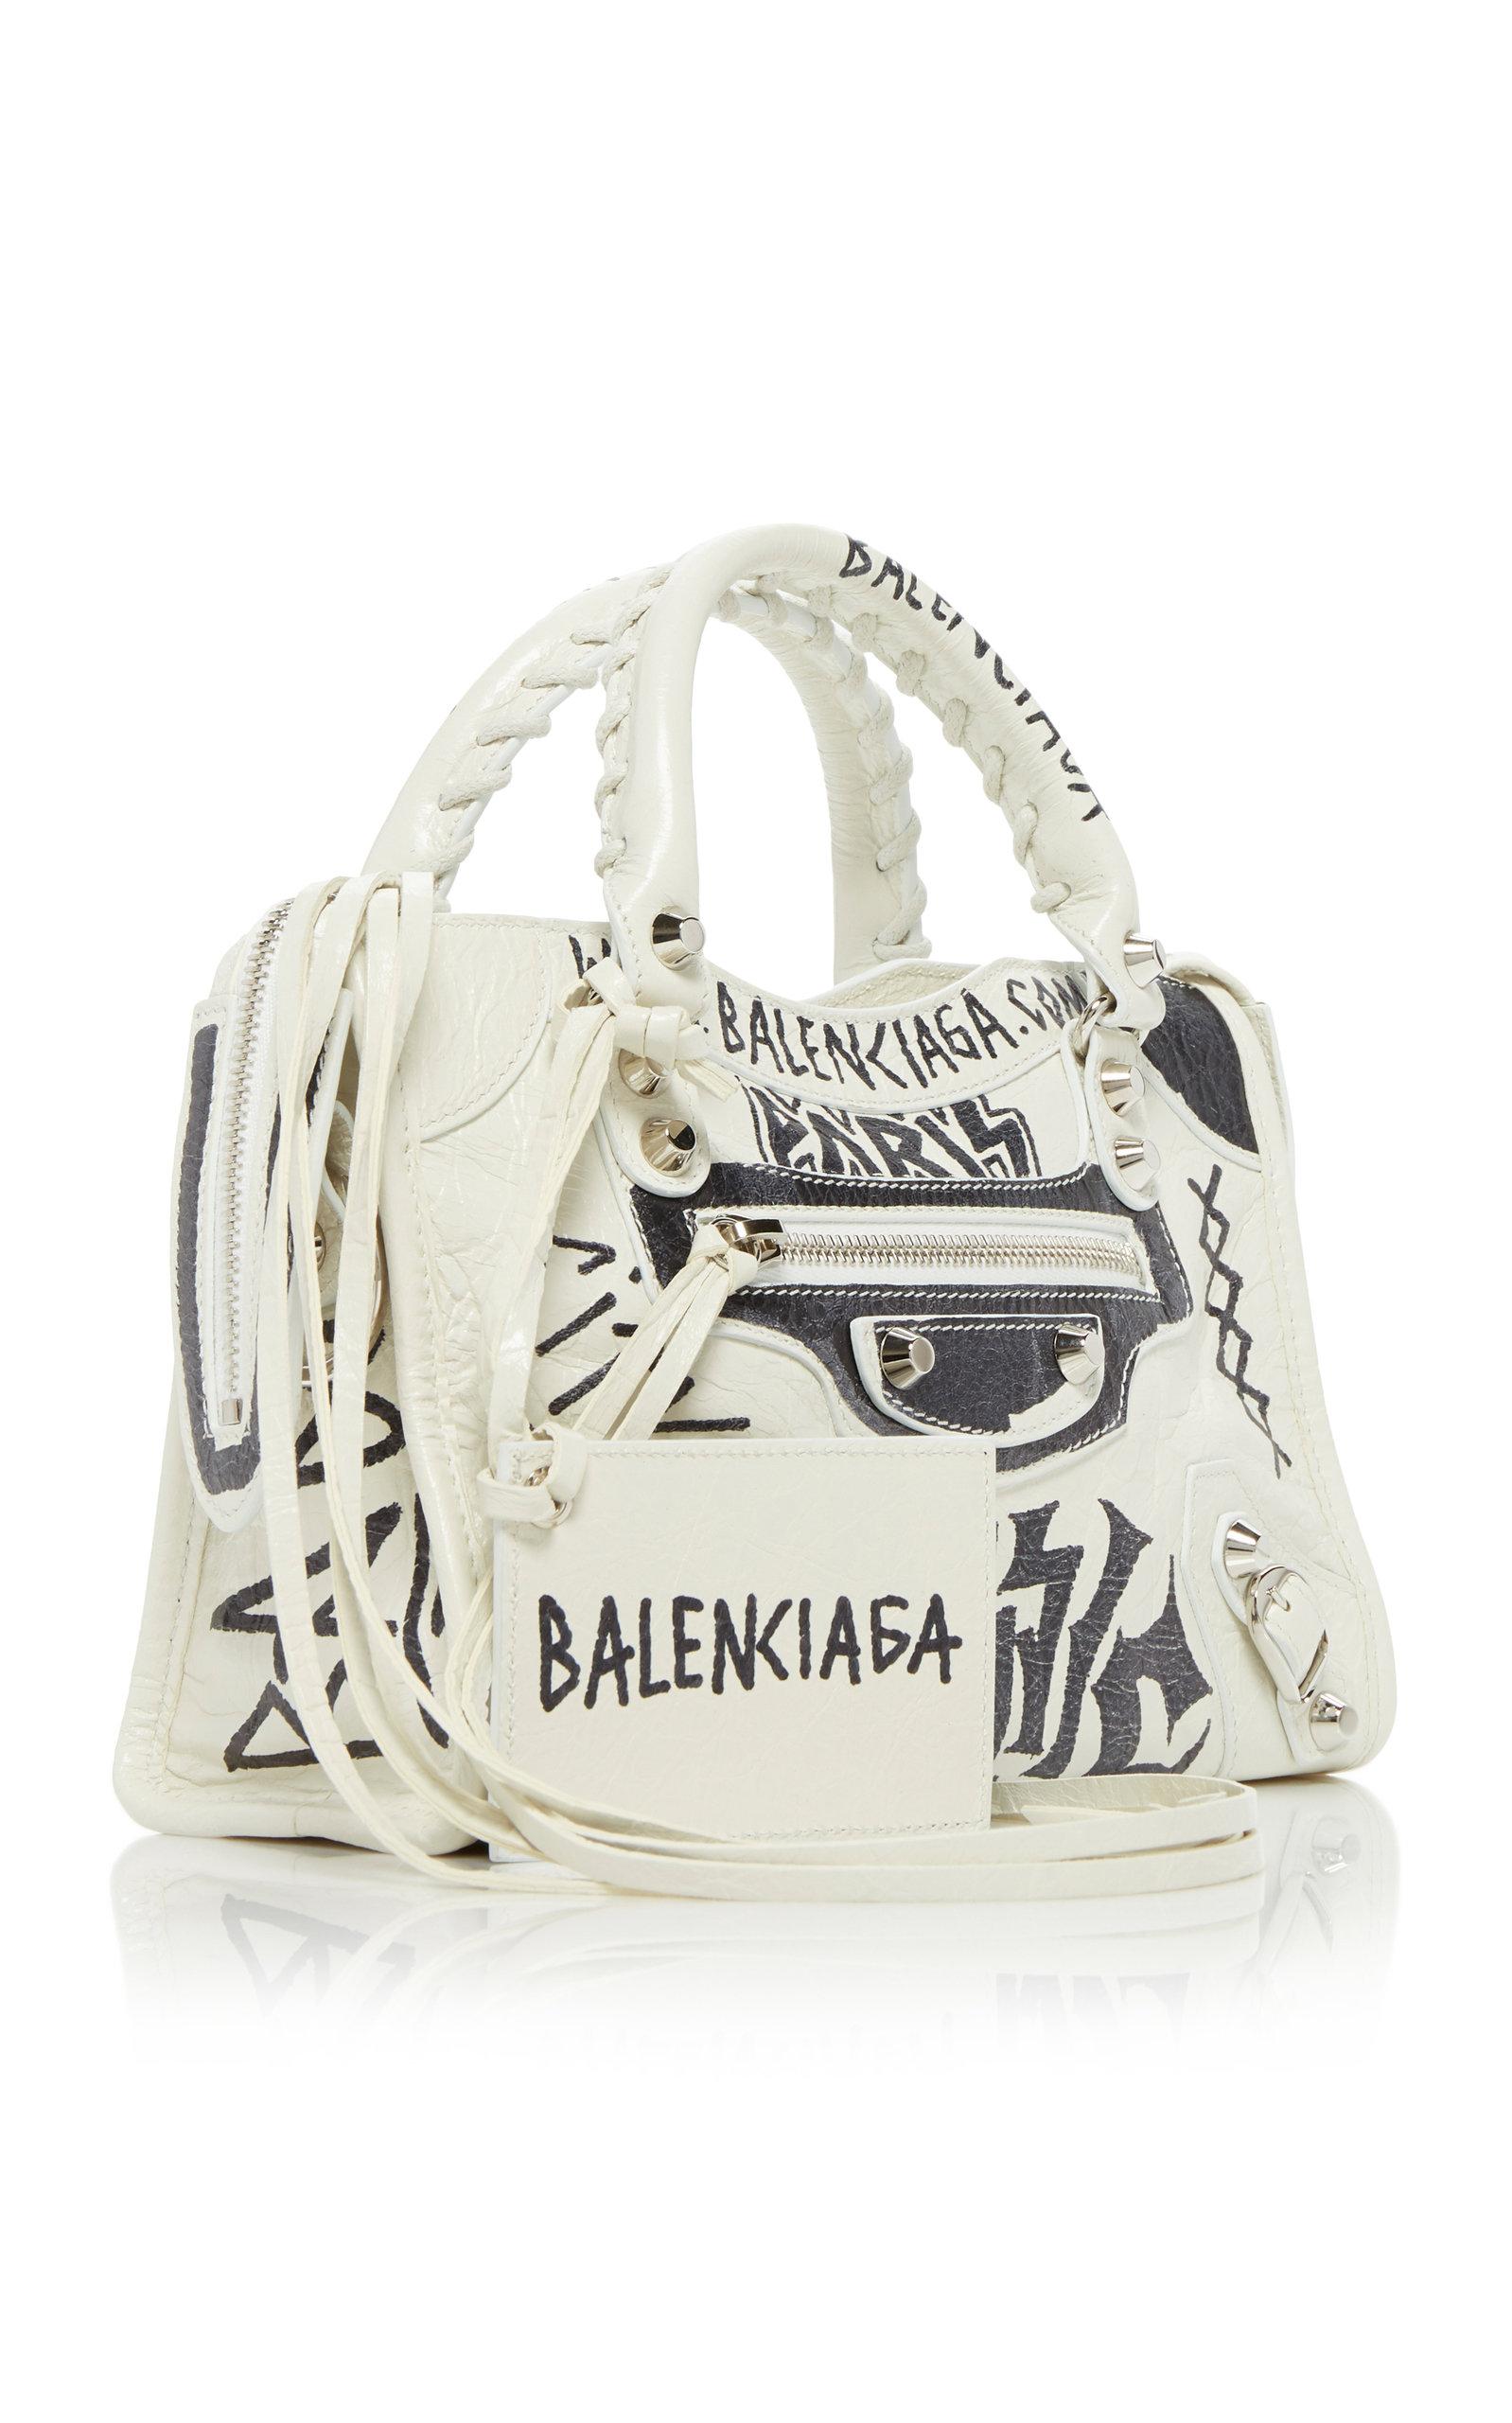 Designer Inspired Graffiti Shoulder Bag – bellesax21